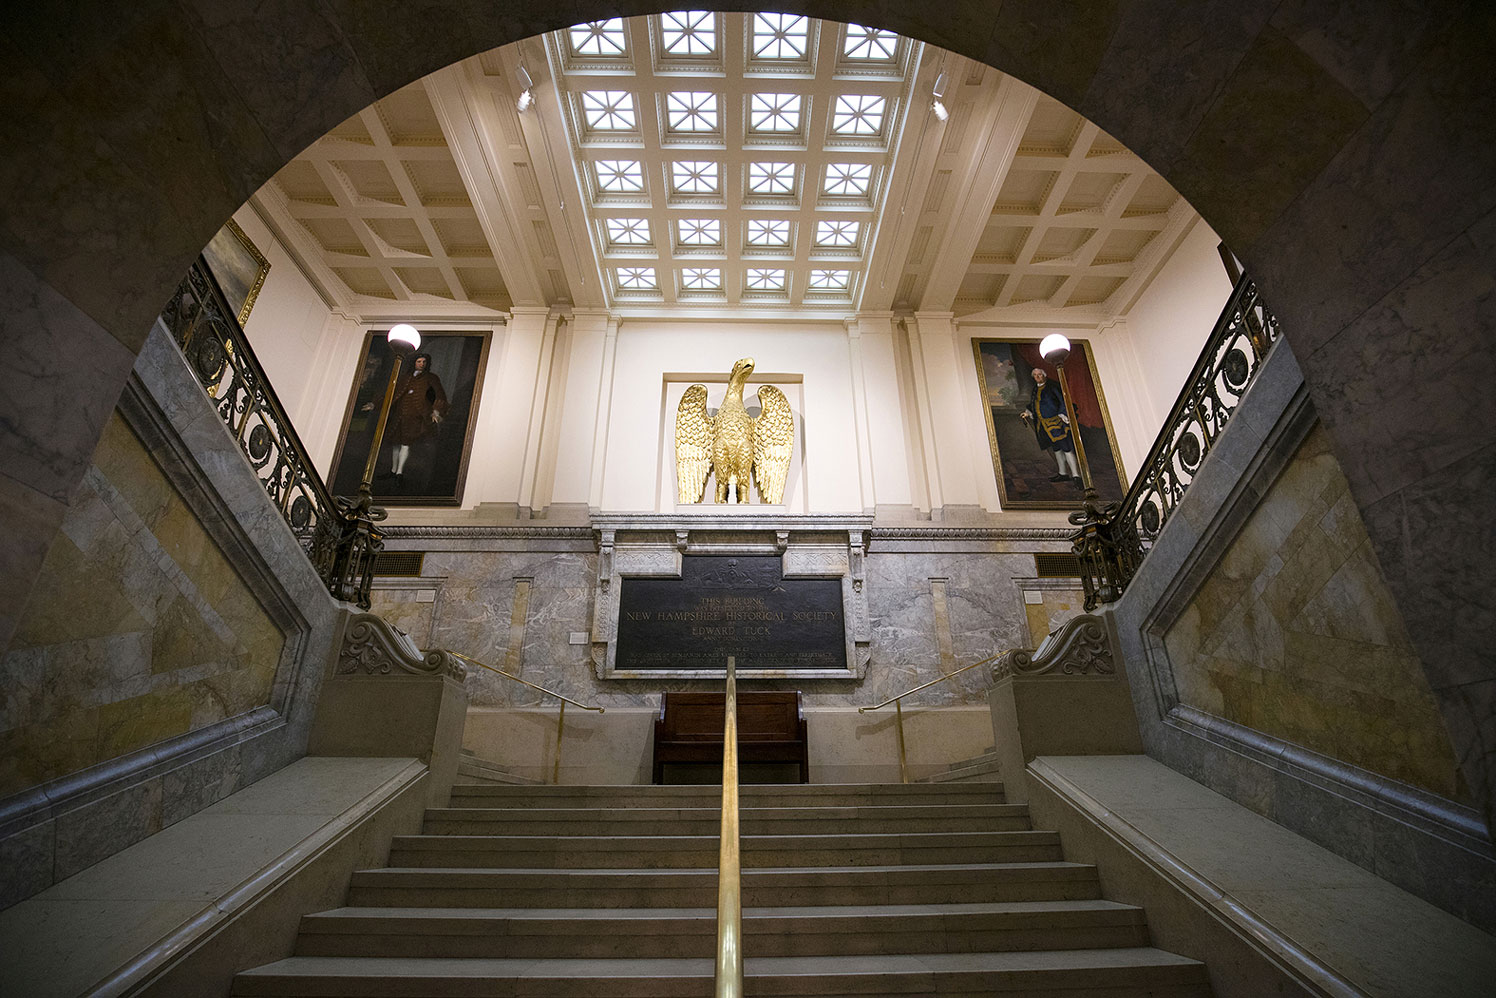 Grand staircase had the NH Historical Society